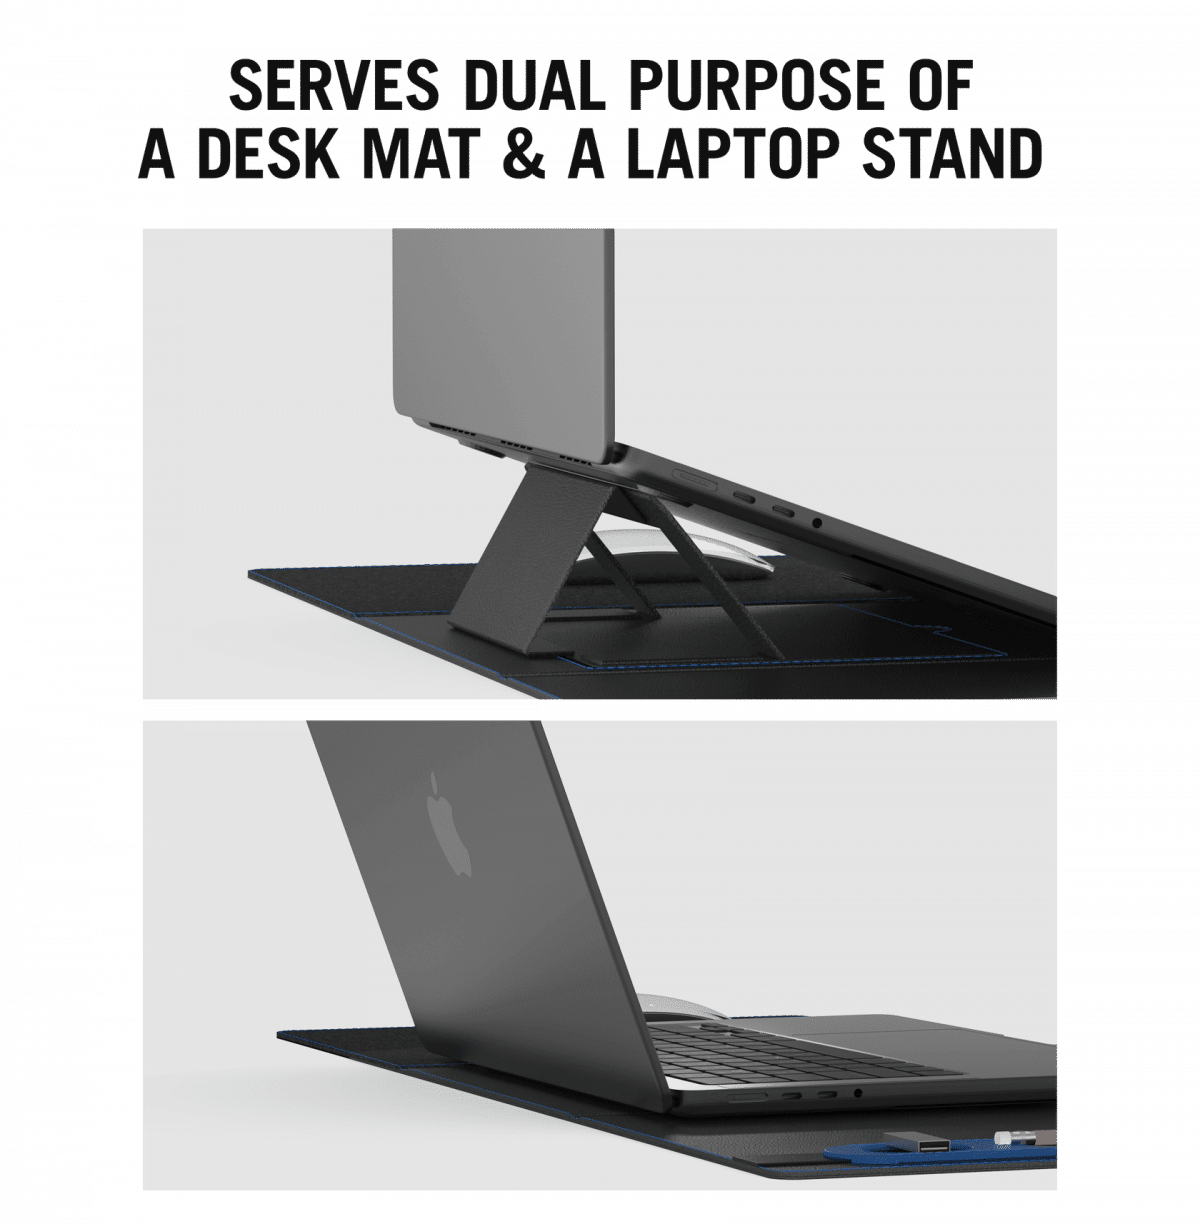 Morph Foldable Deskmat with Laptop Stand - Shop Online - Klippik Kuwait UAE Saudi